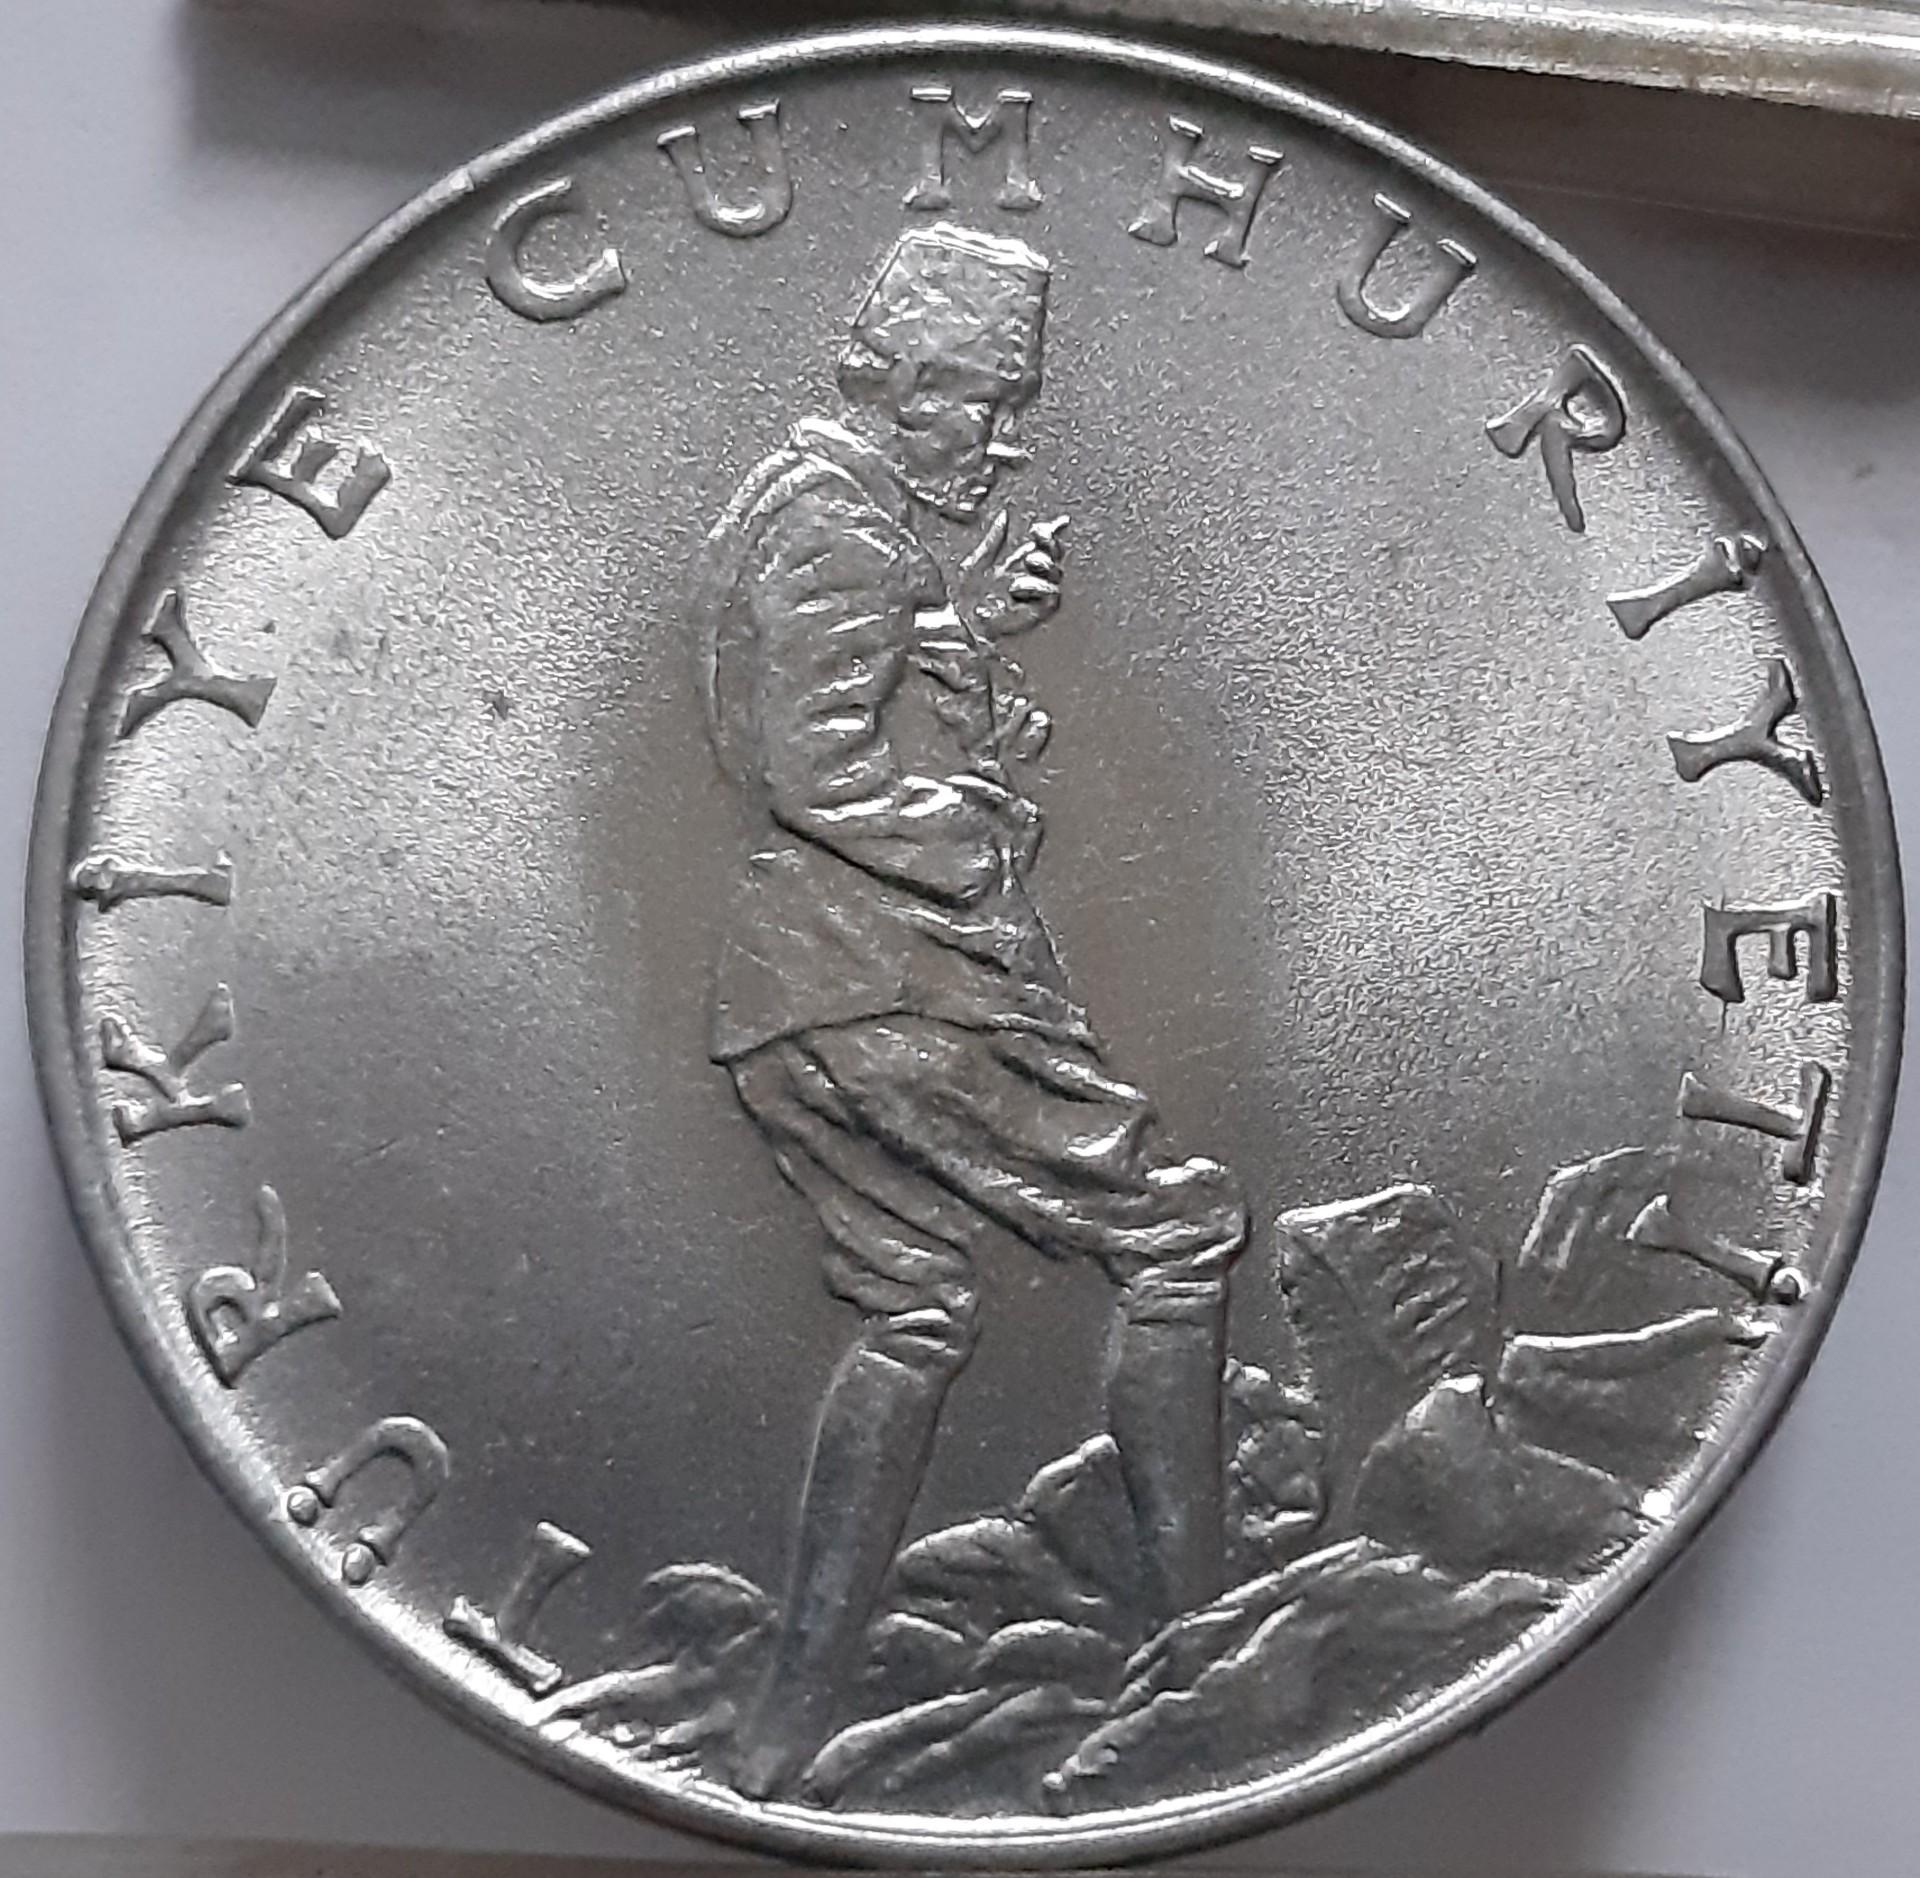 Turkija 2 1/2 liros 1967 KM#893.1 (7135)